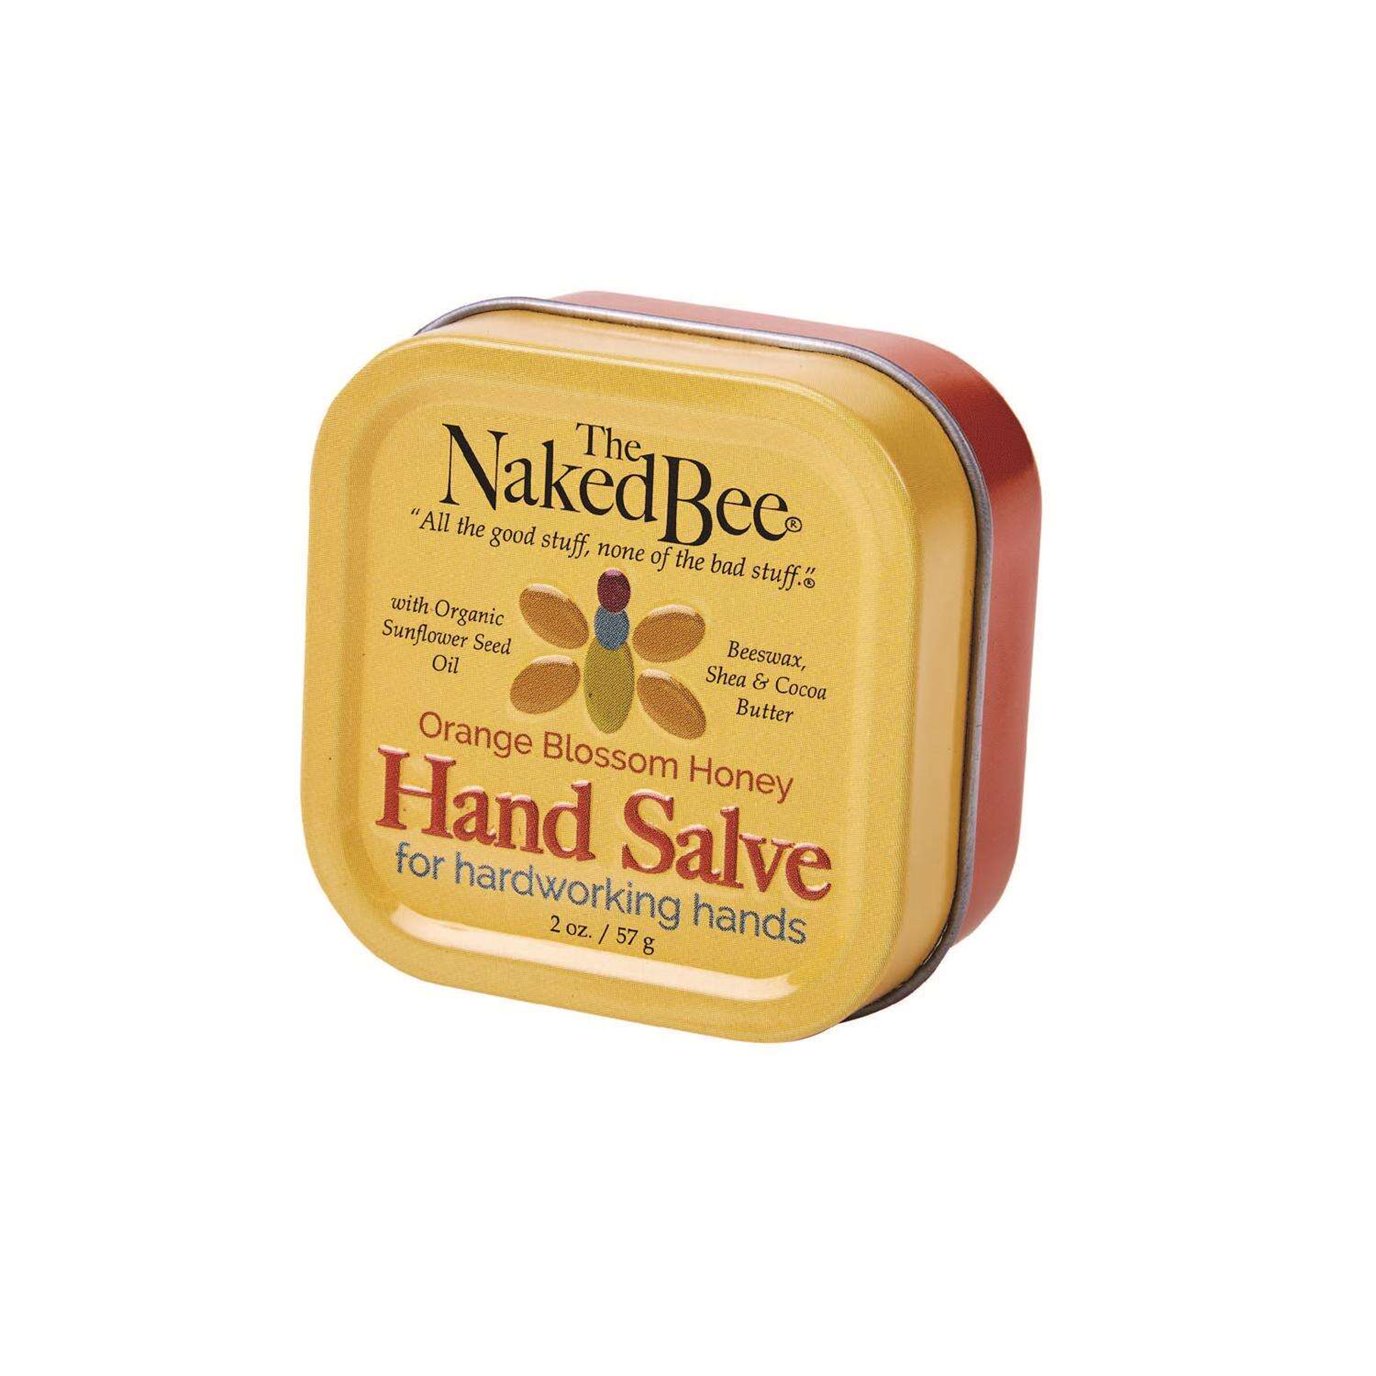 Naked Bee Orange Blossom Honey Hand Salve 1.5 oz